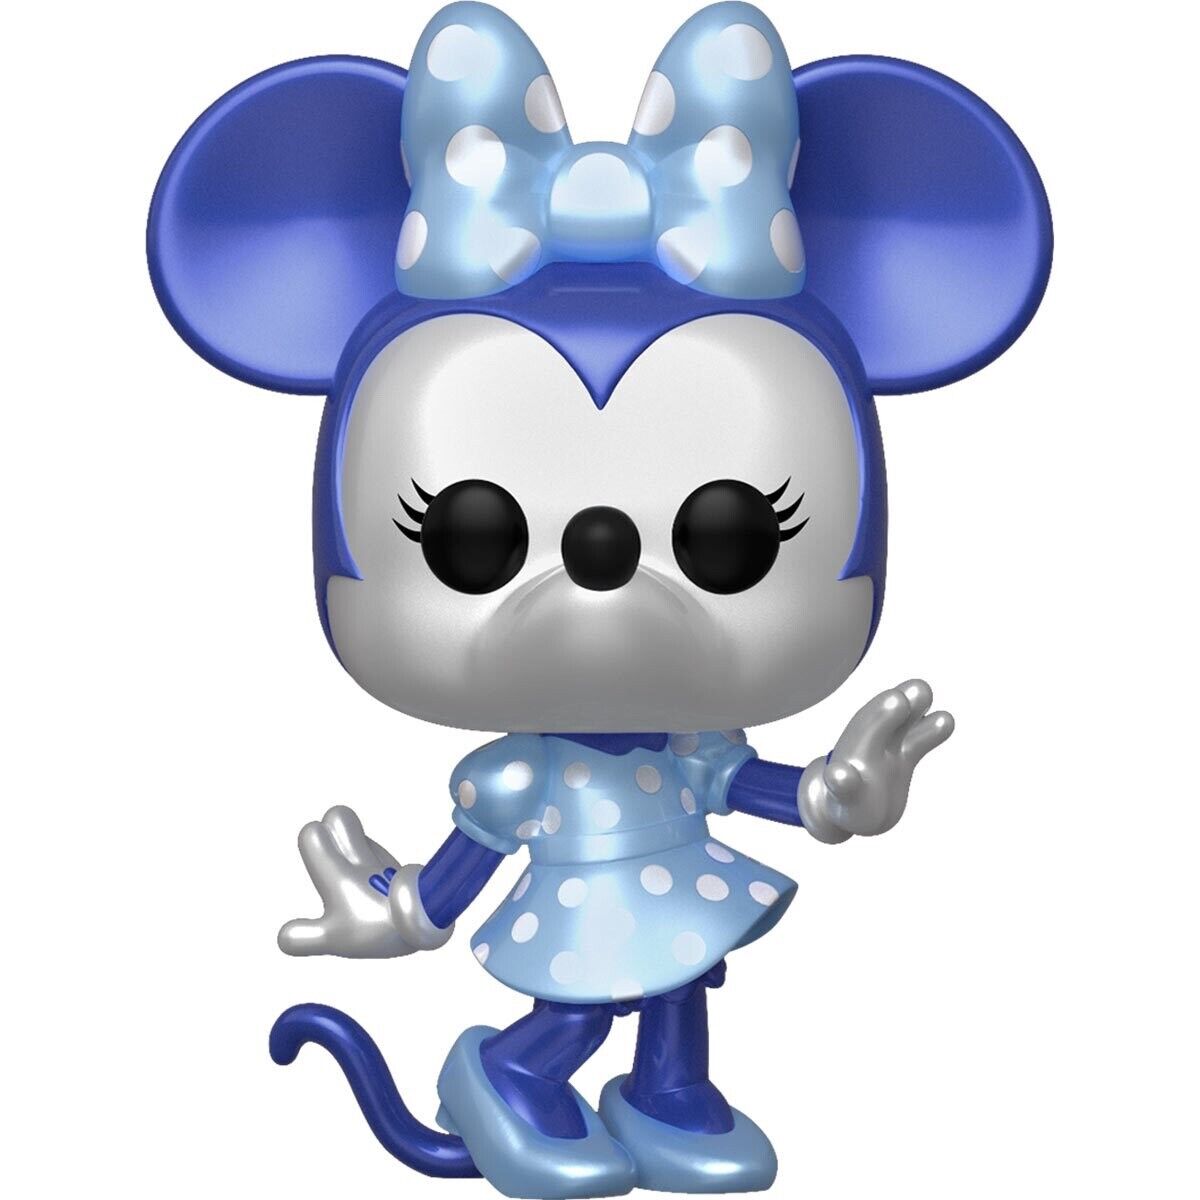 Minnie Mouse (metallic) • FUNKO • Make-A-Wish Special Ed • w/Protec • Ships Free